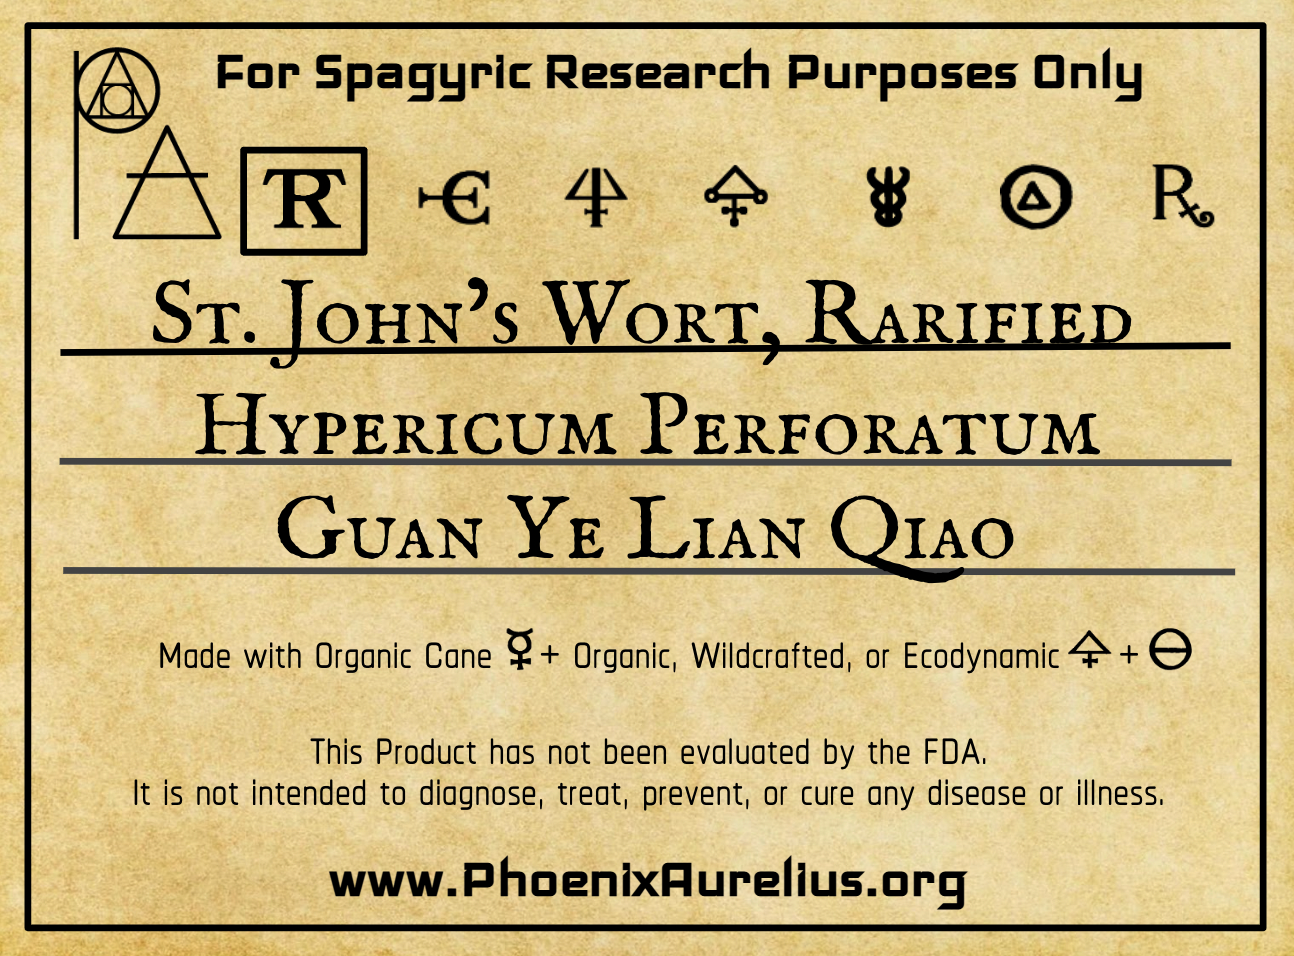 St John's Wort, Rarified, Spagyric Tincture (Without Hypericin)